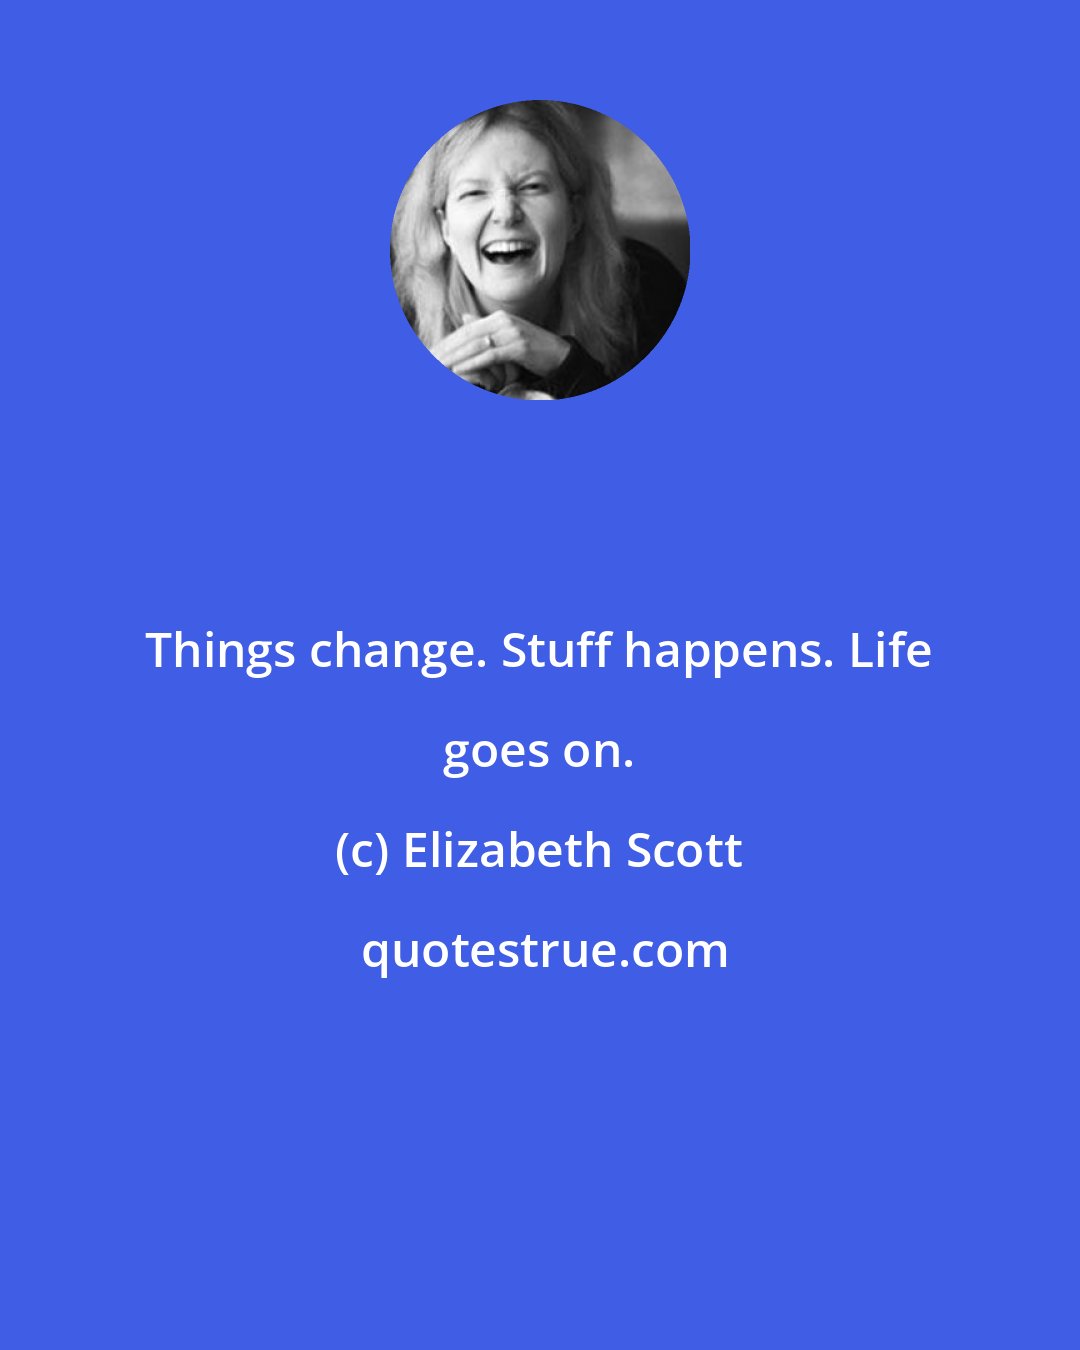 Elizabeth Scott: Things change. Stuff happens. Life goes on.